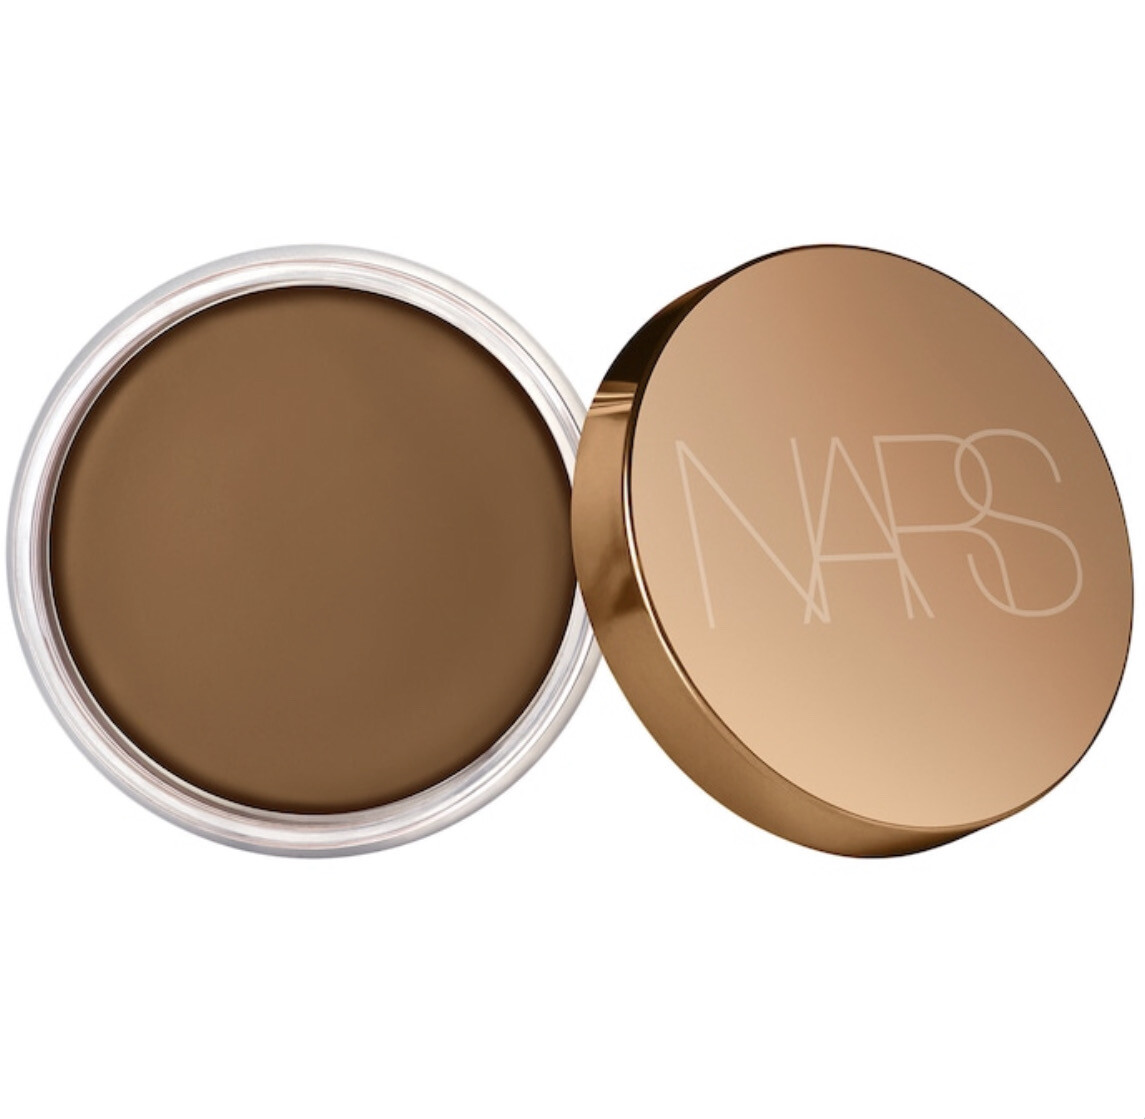 NARS - Laguna Bronzing Cream | Laguna 03 - medium bronze with warm undertones